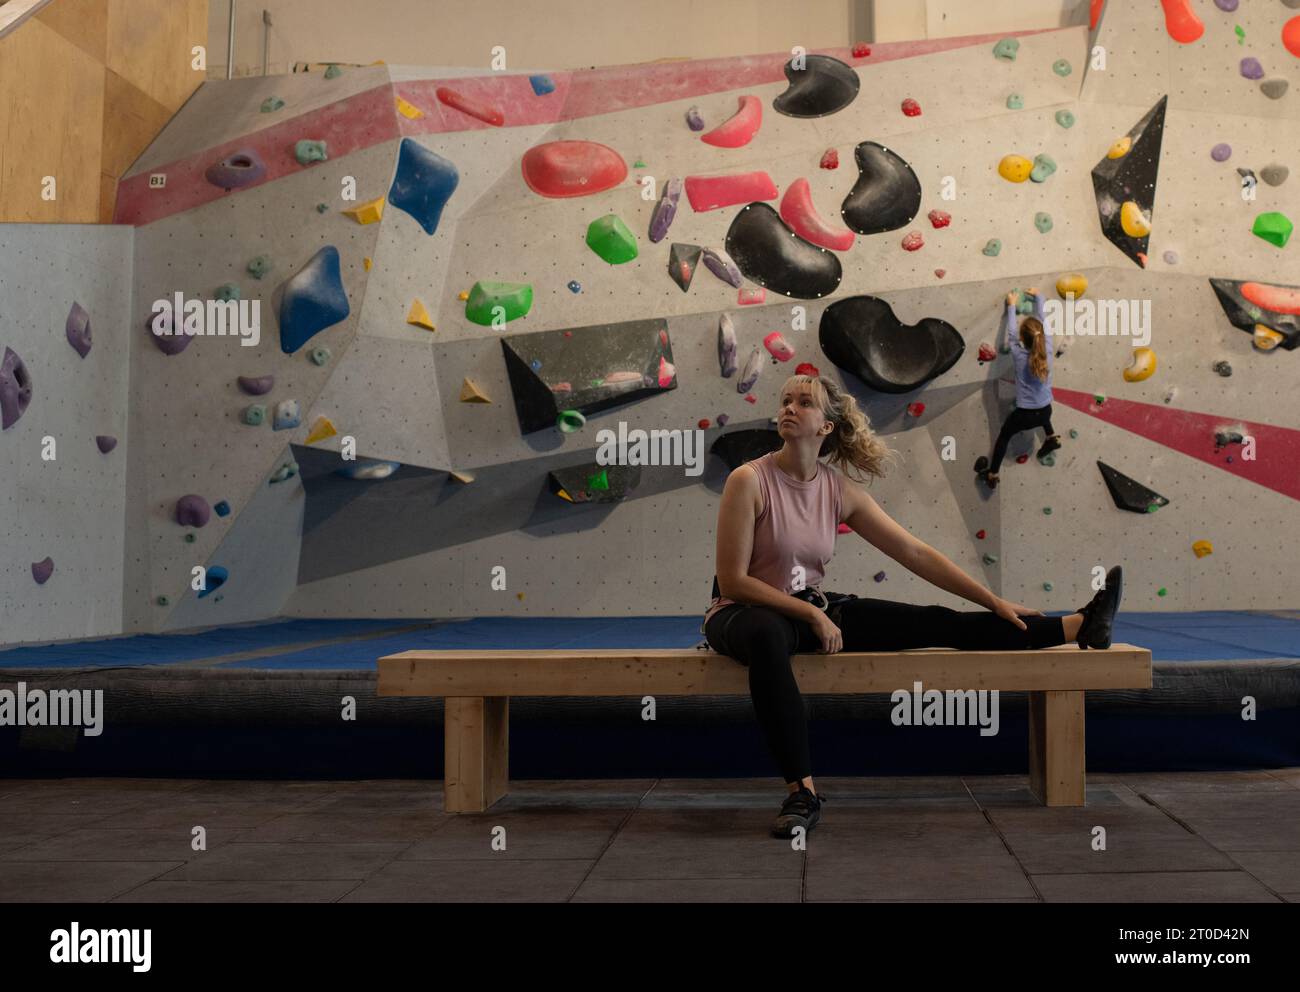 Indoor climbing wall training artificial -Fotos und -Bildmaterial in hoher  Auflösung – Alamy